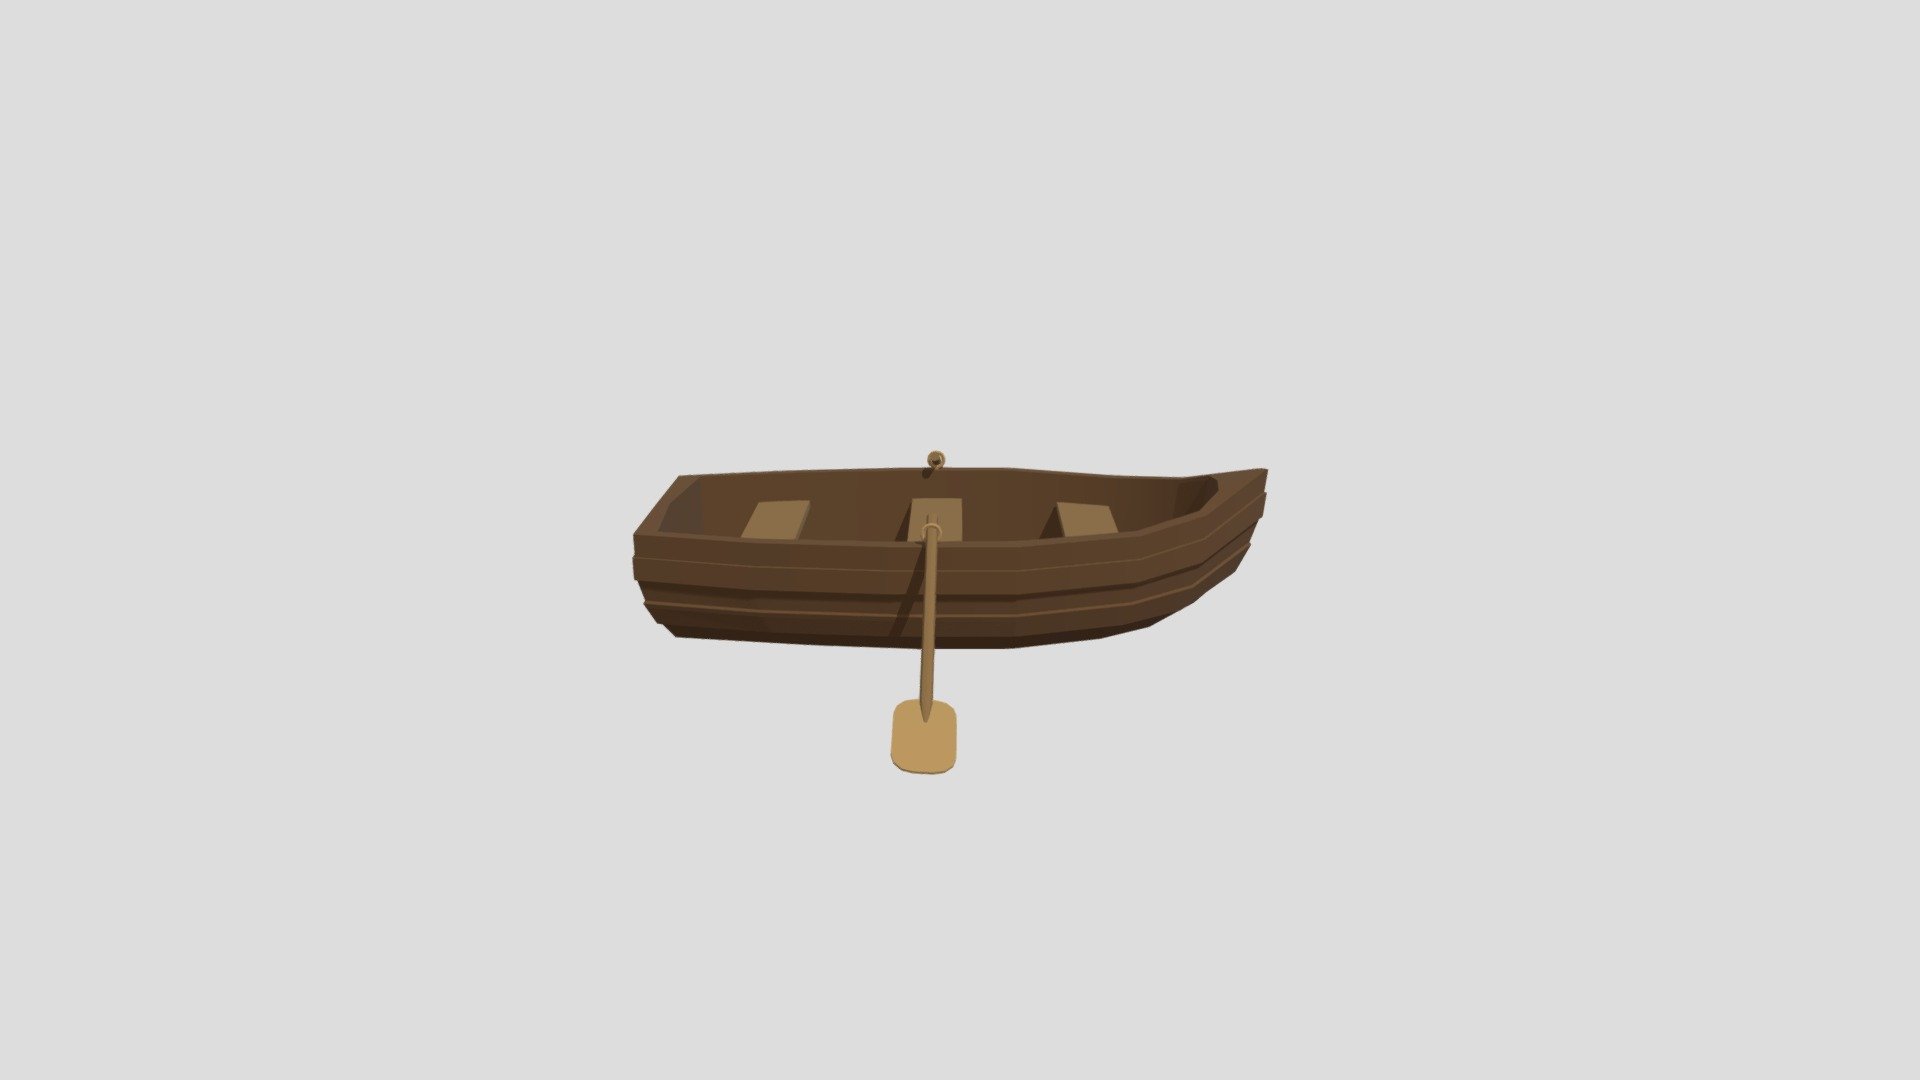 Low Poly Rowboat 3d Model By Casmodels 03be666 Sketchfab 